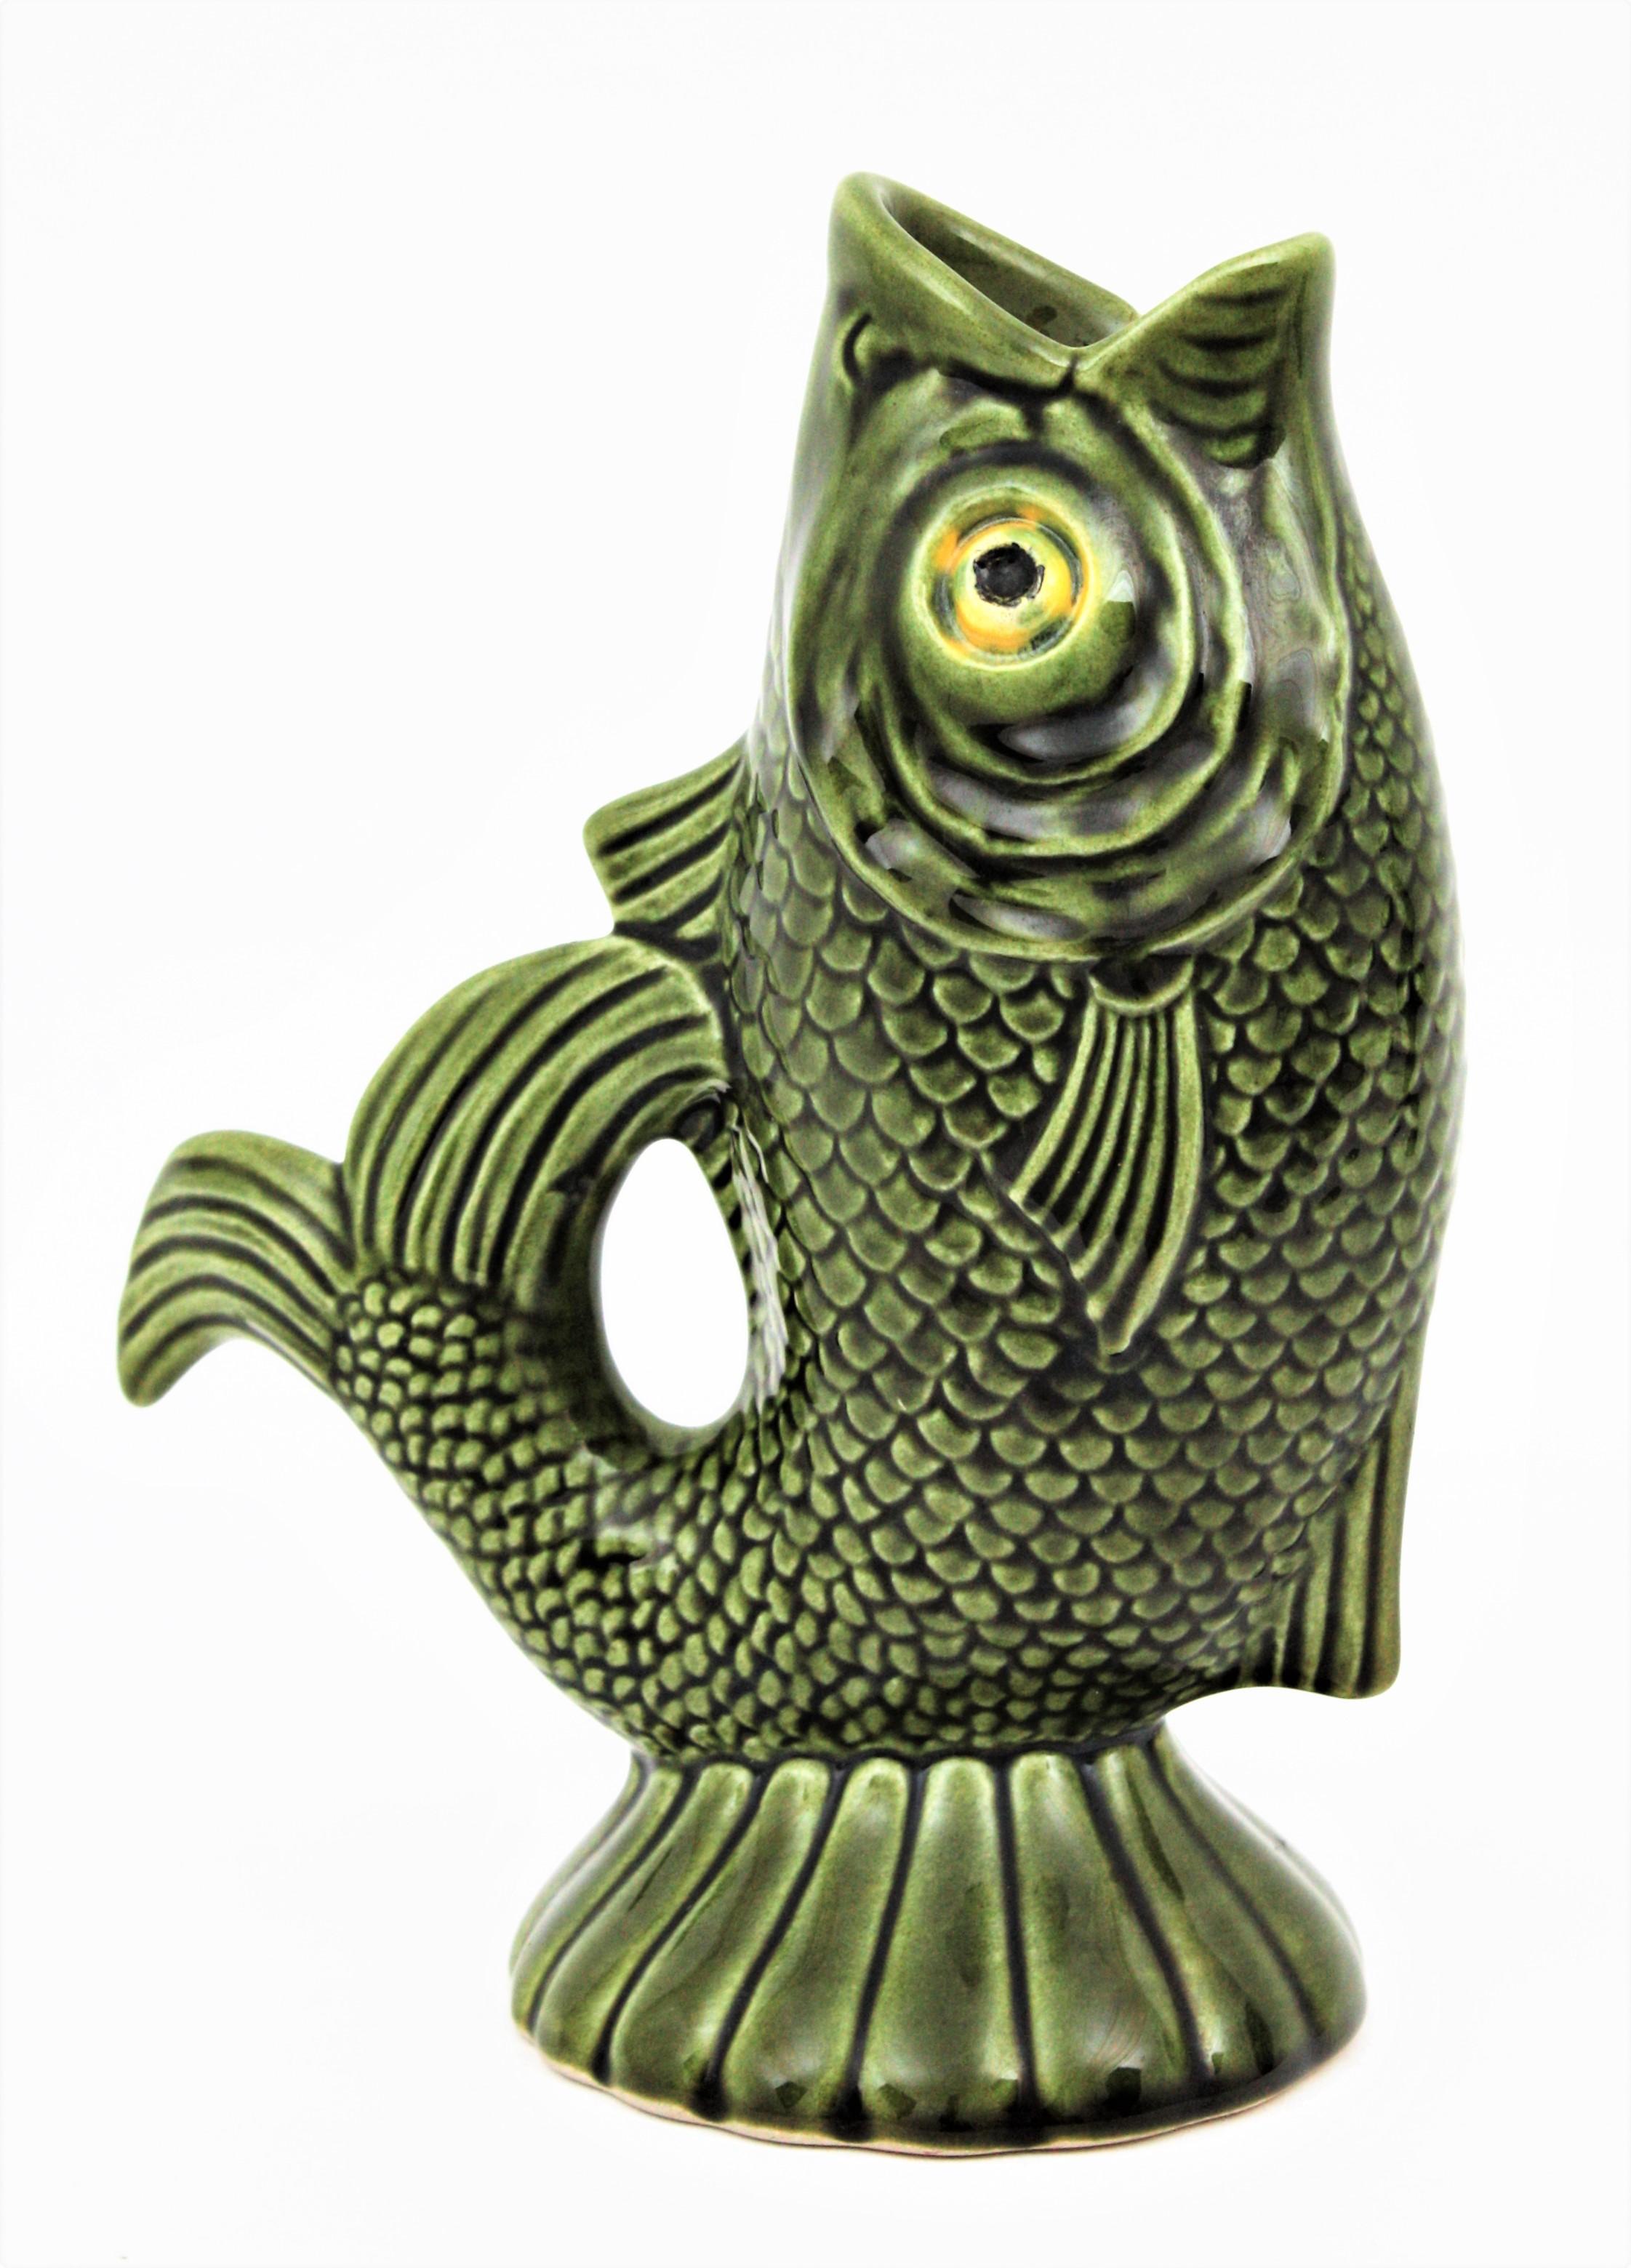 20th Century Pair of Mid-Century Modernist Glazed Ceramic Gurgle Fish Water Jugs / Pitchers